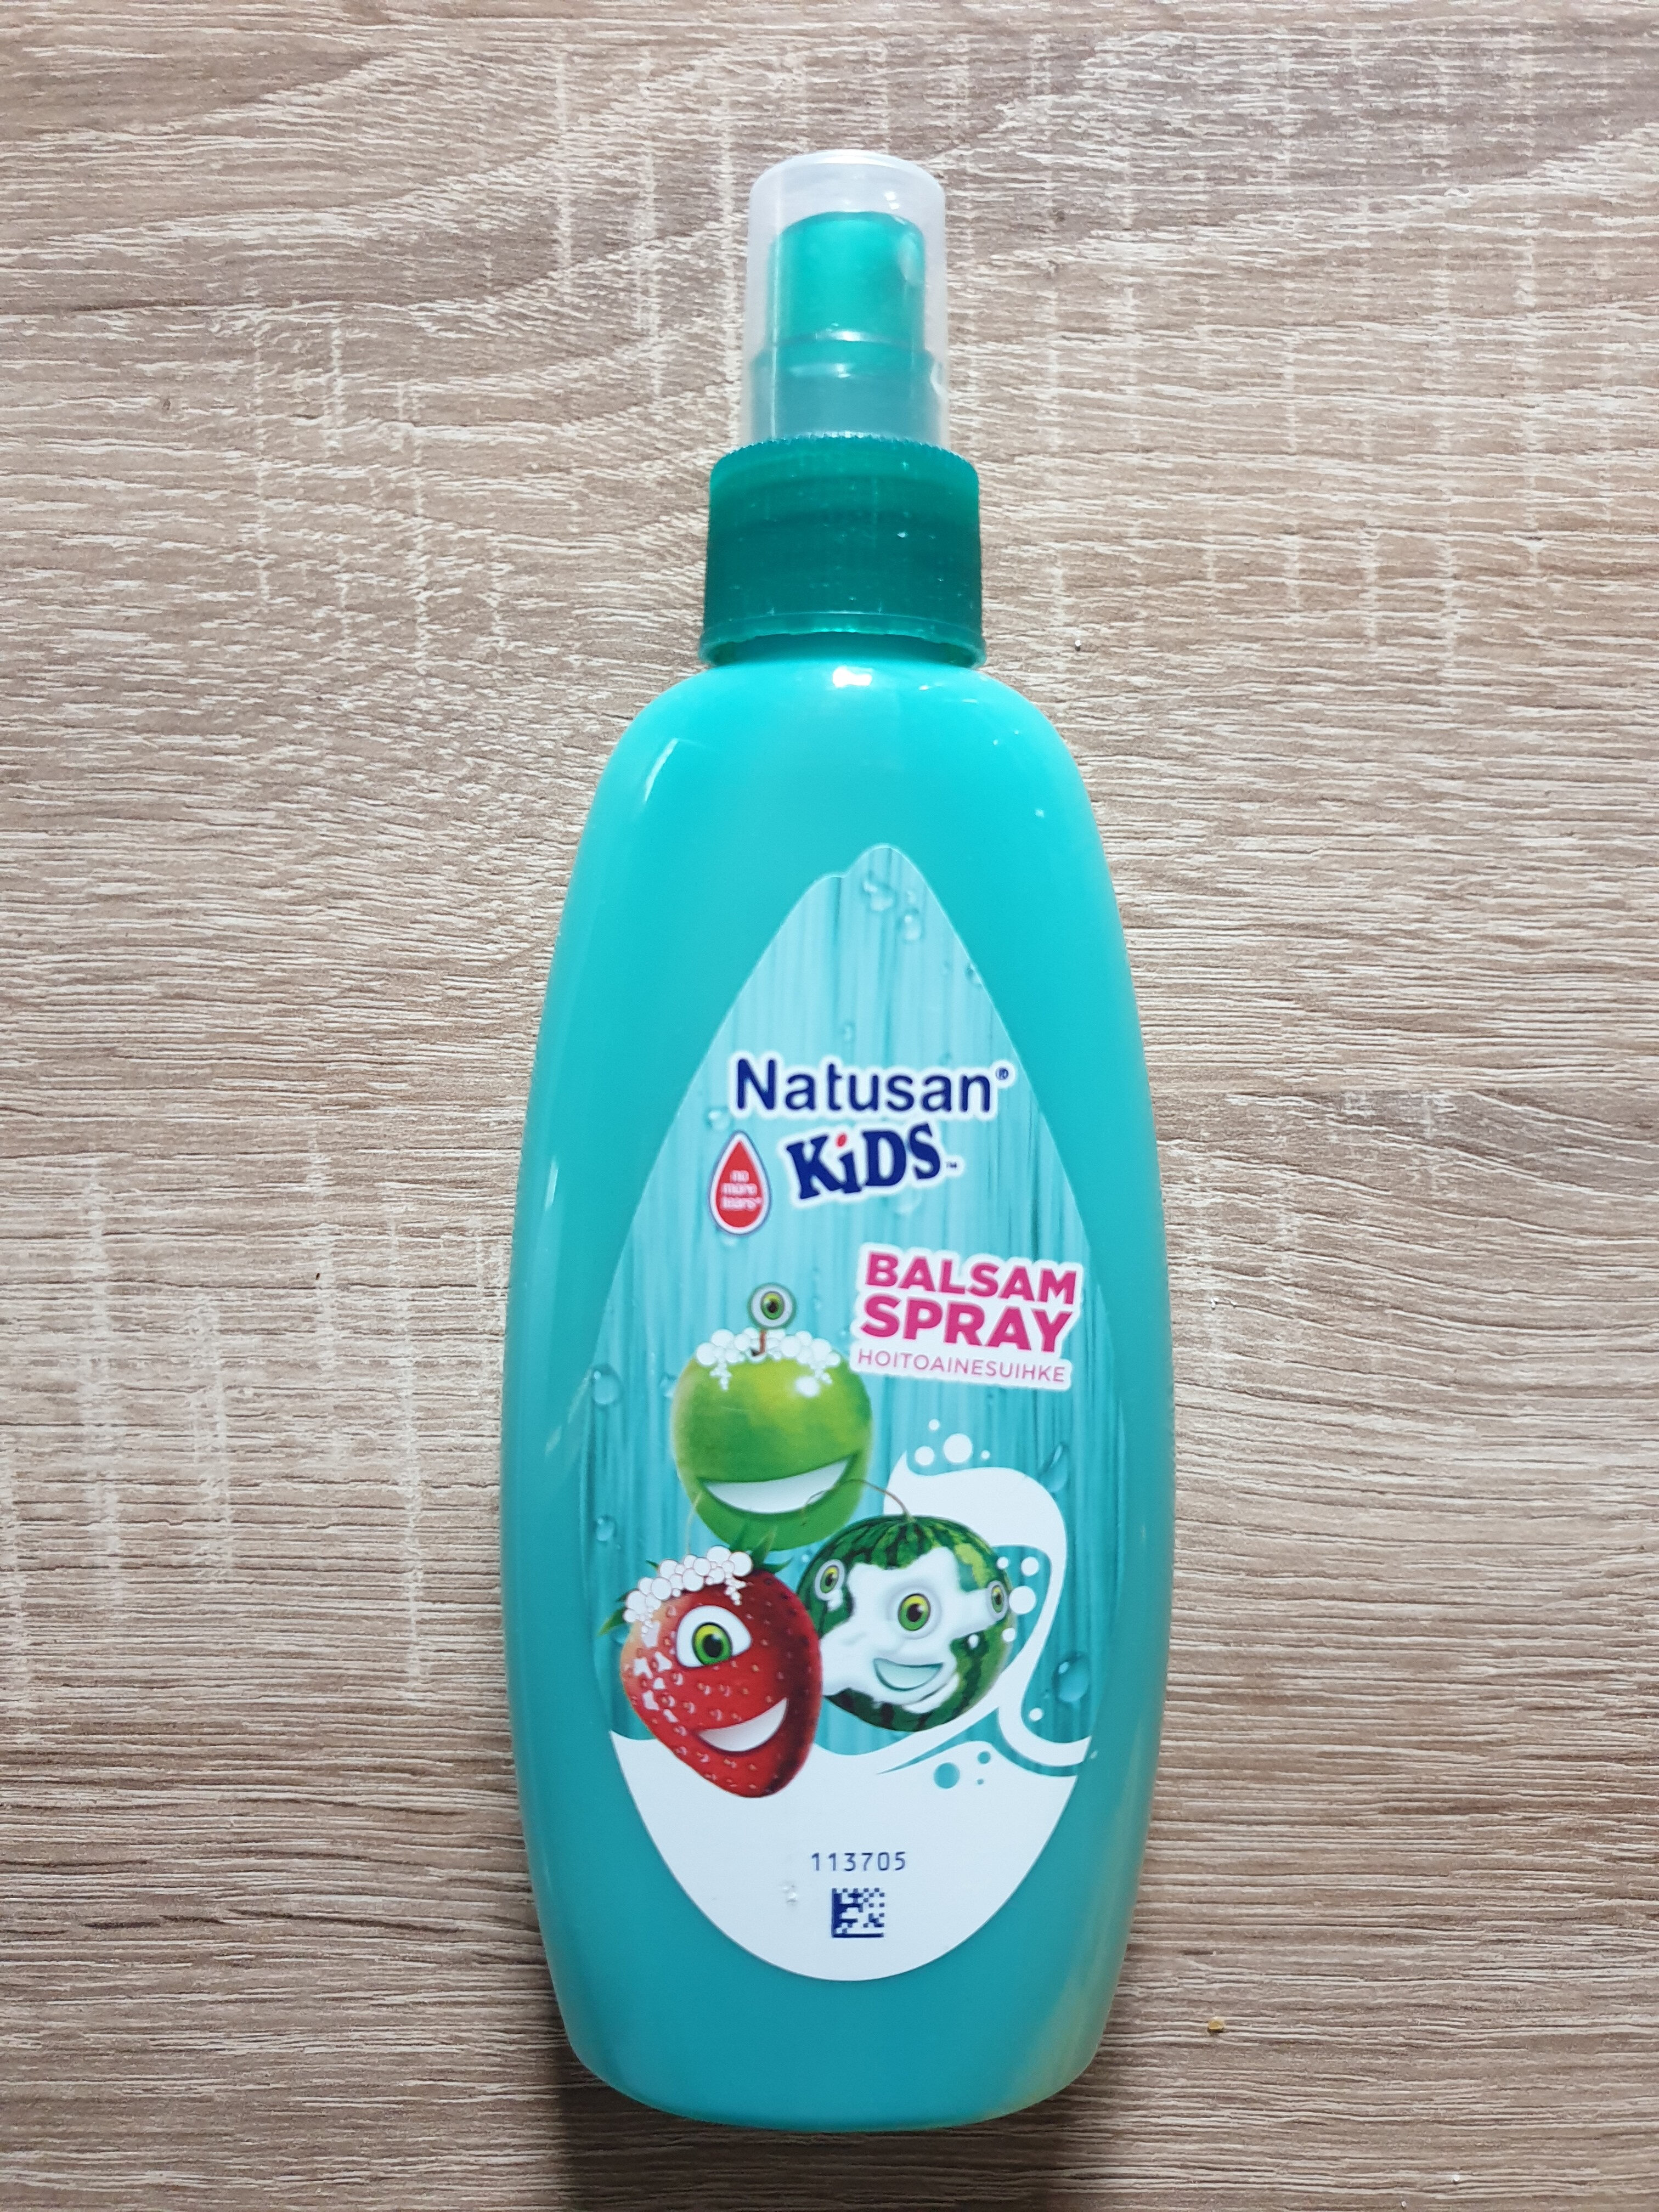 Natusan Kids Balsam spray - Product - nb